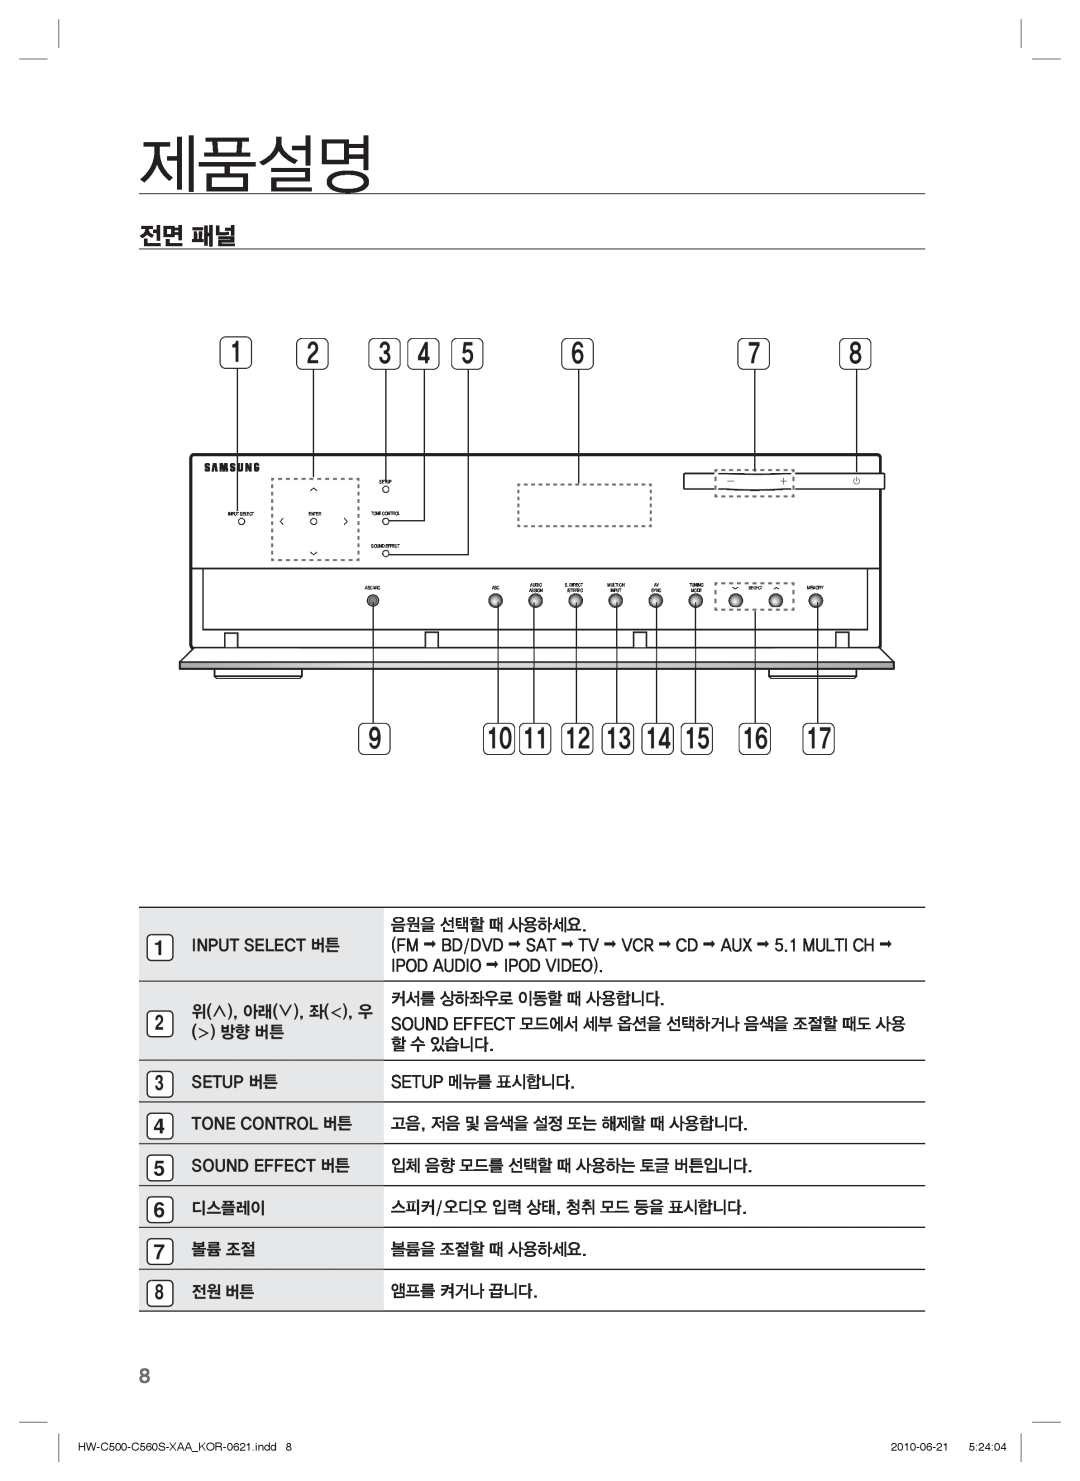 Samsung C560S manual 제품설명, 전면 패널 